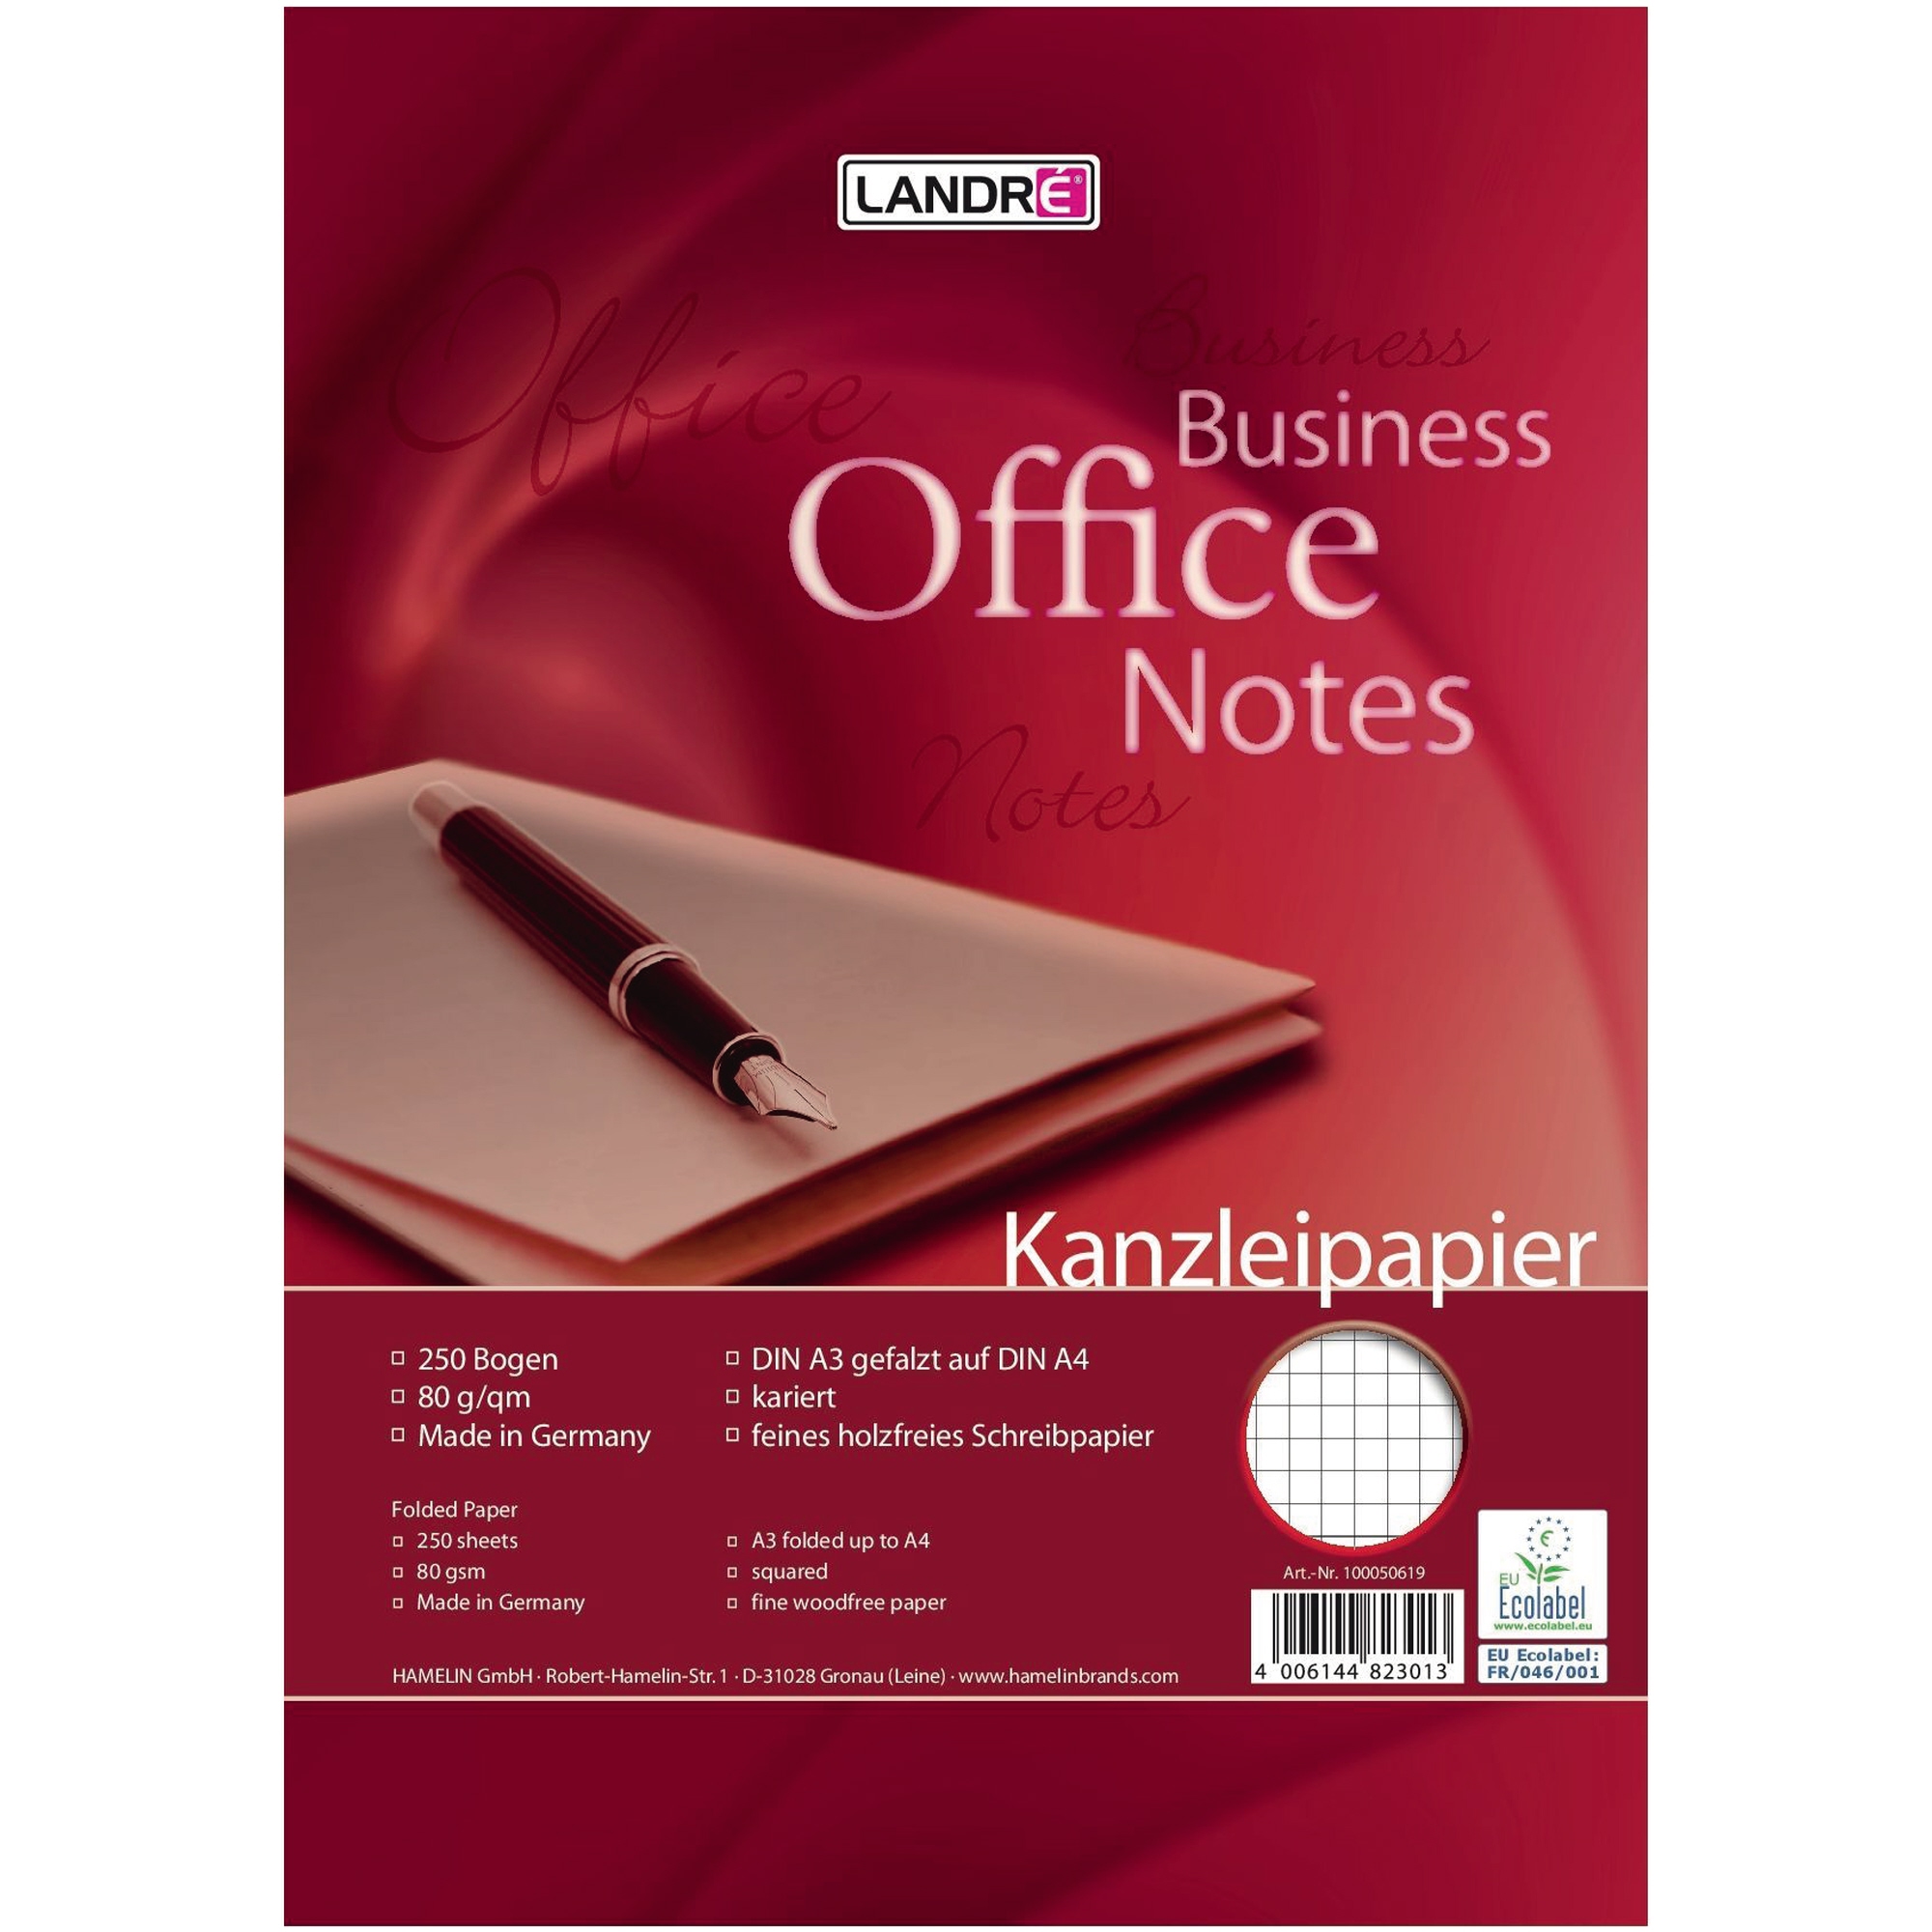 Landré Kanzleipapier Business Office Notes 22